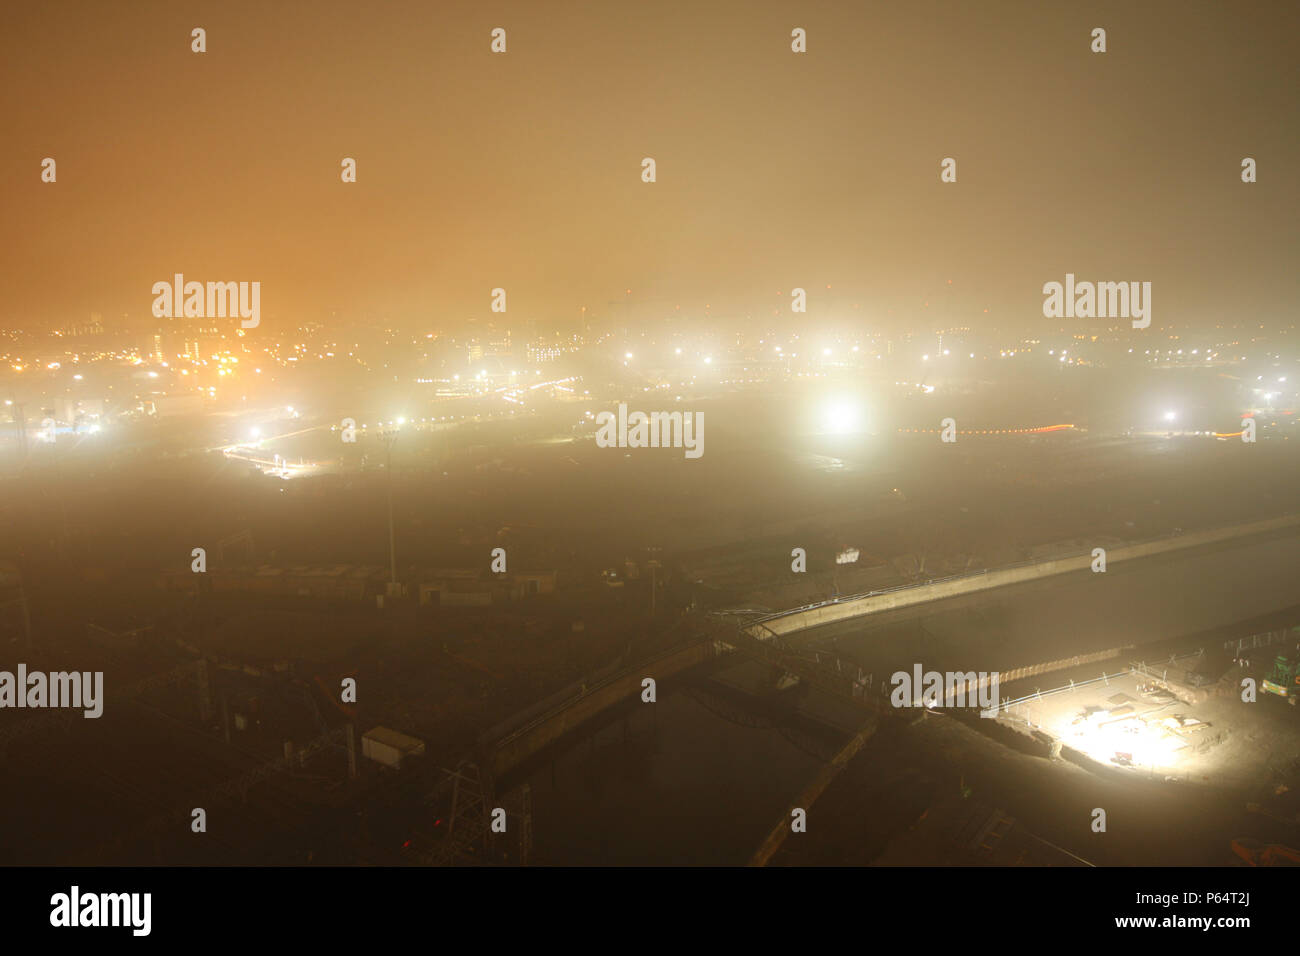 Olympic Stadium during construction, Stratford, London, UK, foggy night, January 2009, looking West Stock Photo